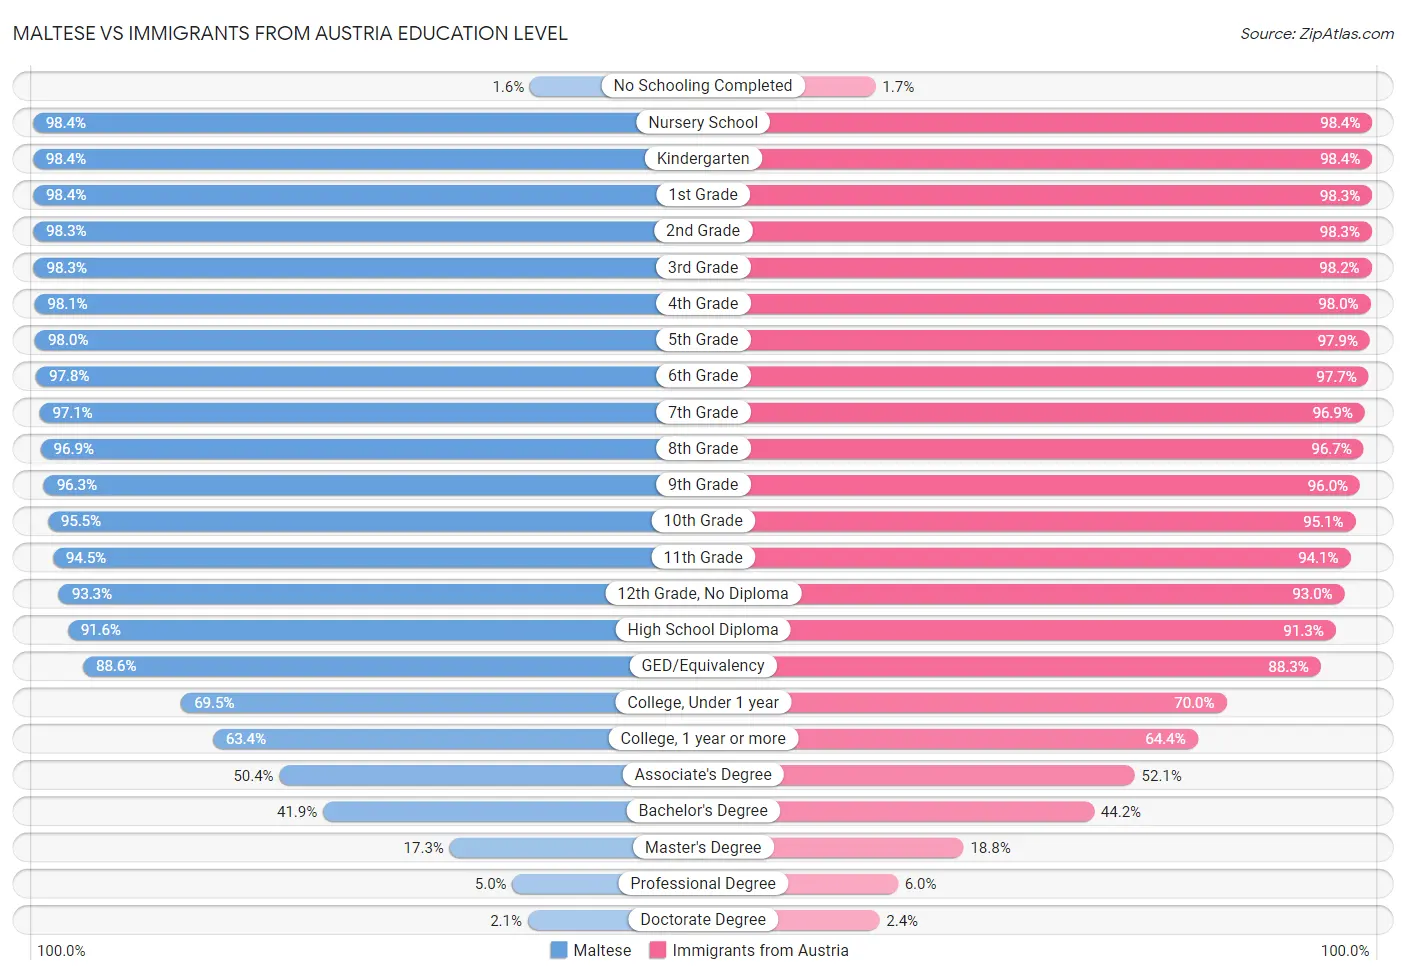 Maltese vs Immigrants from Austria Education Level